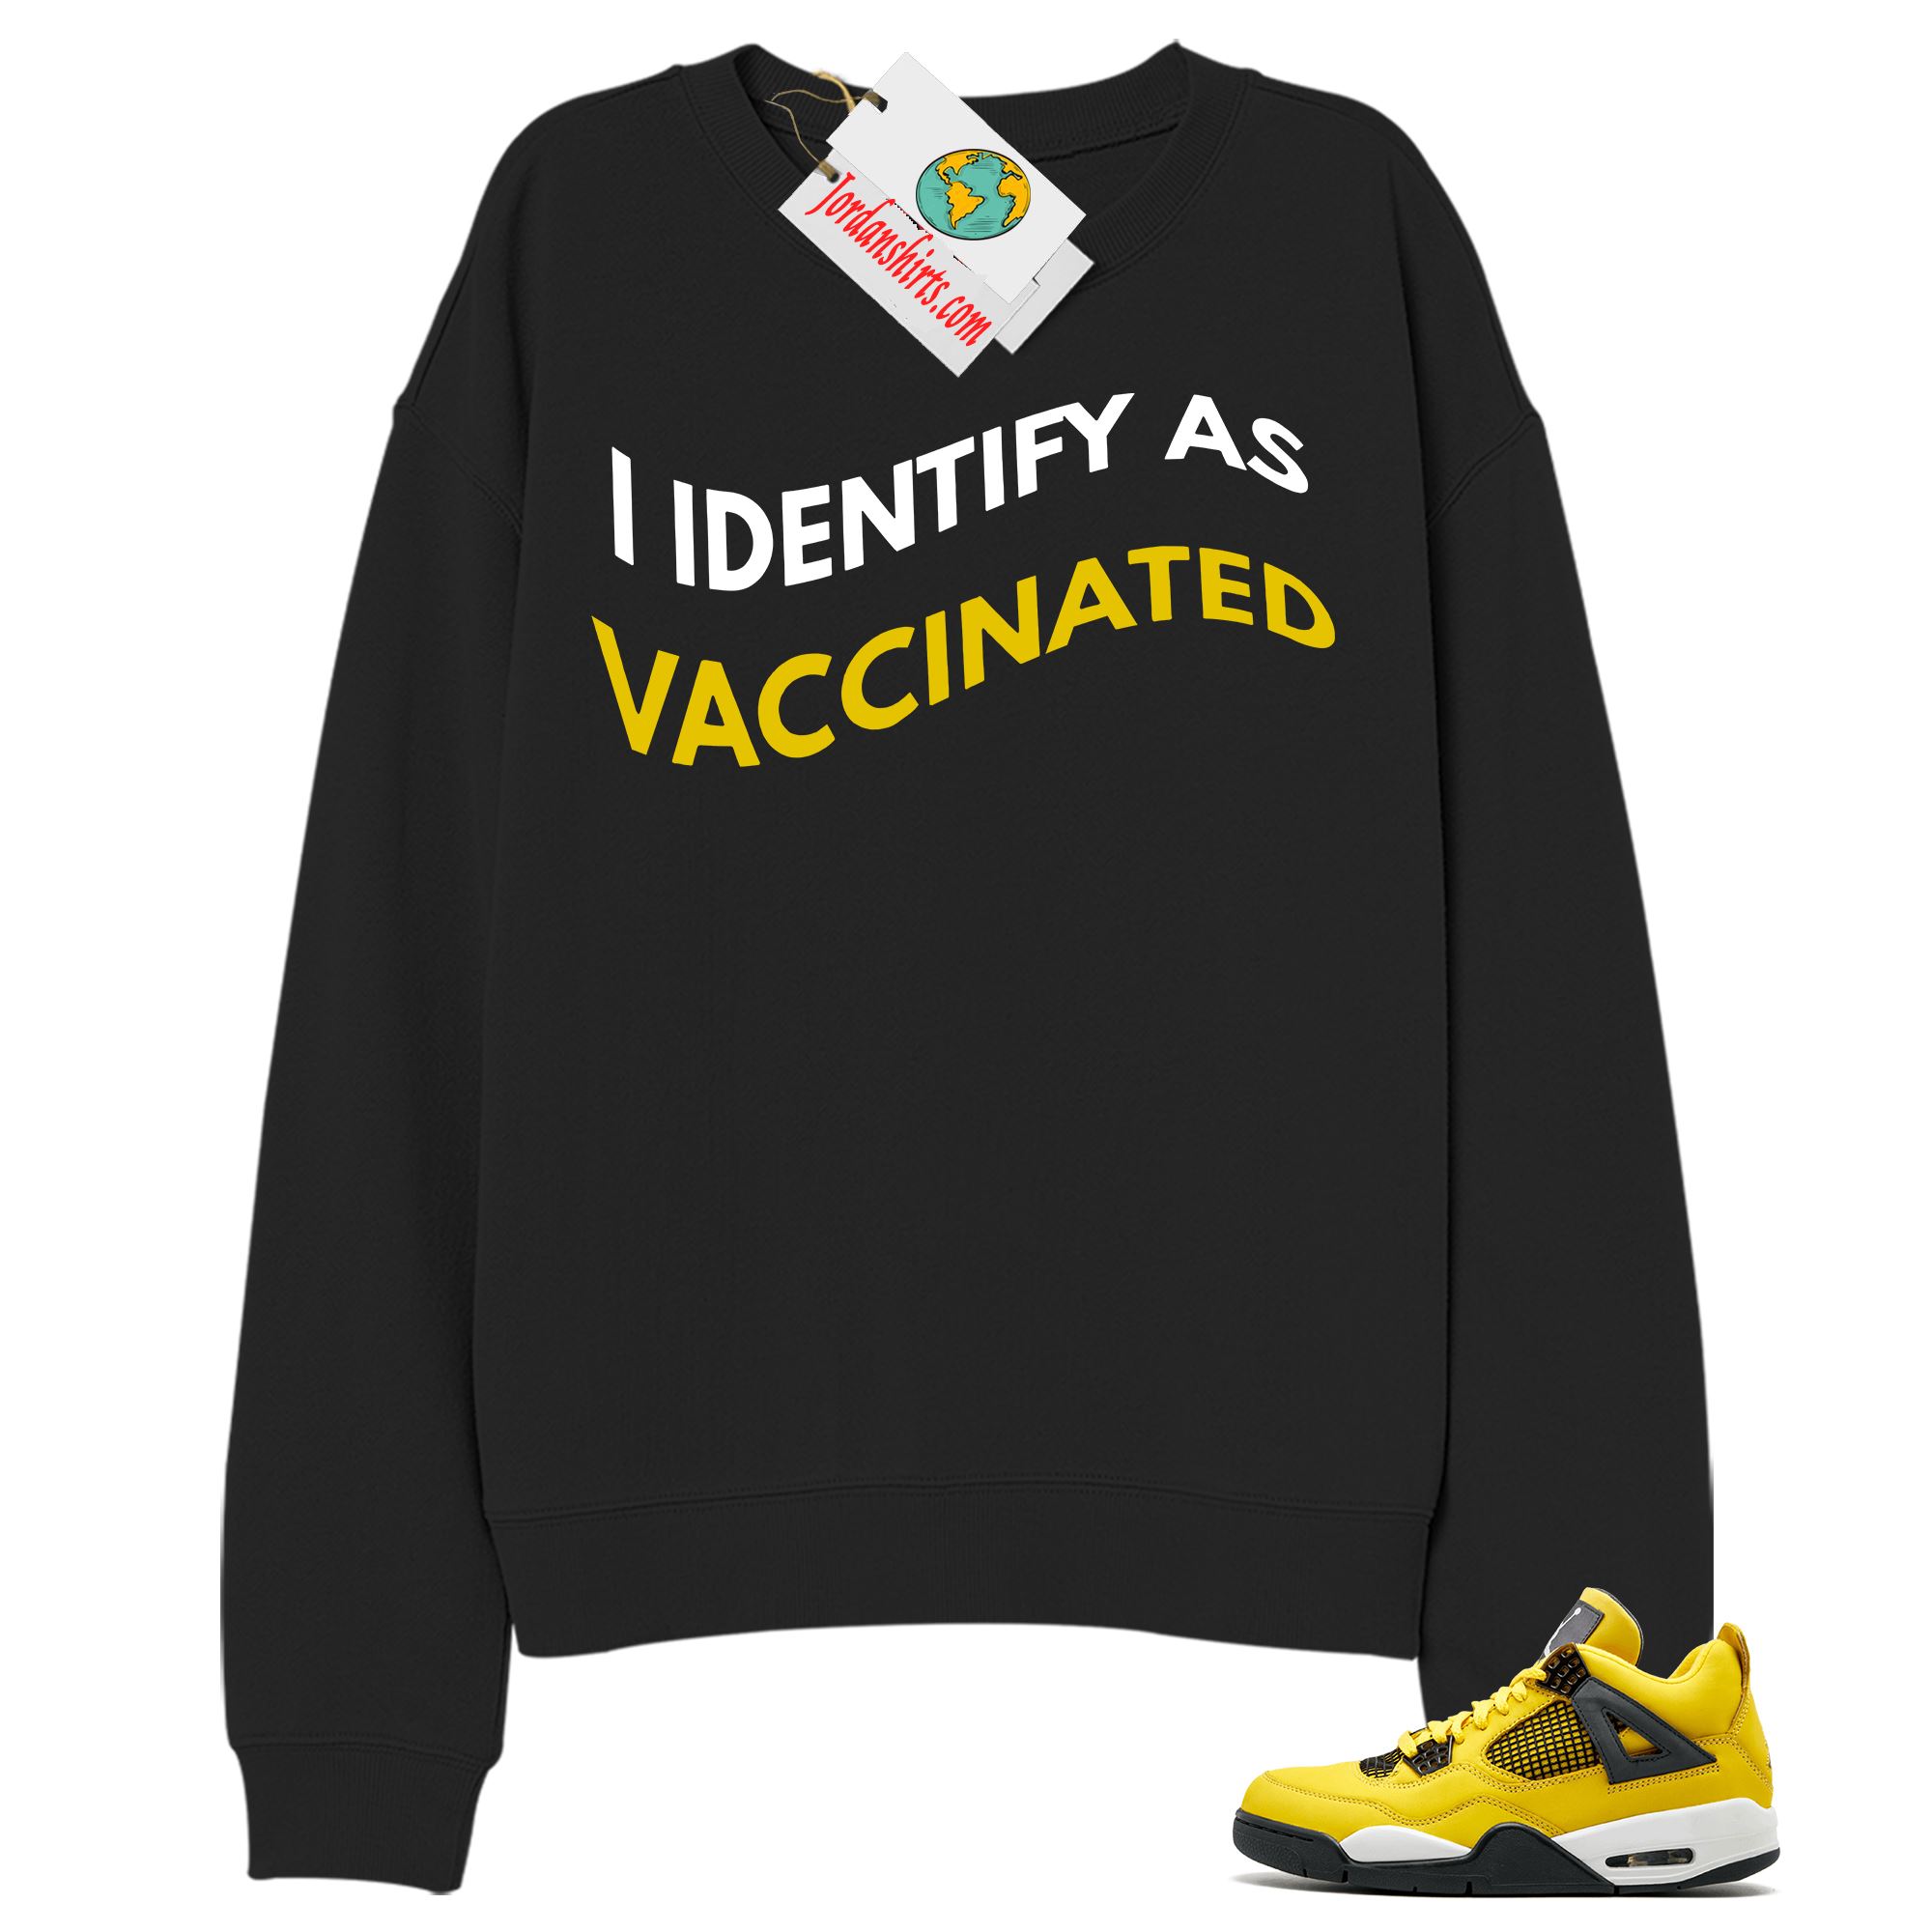 Jordan 4 Sweatshirt, I Identify As Vaccinated Black Sweatshirt Air Jordan 4 Tour Yellow Lightning 4s-trungten-vg3tj Size Up To 5xl